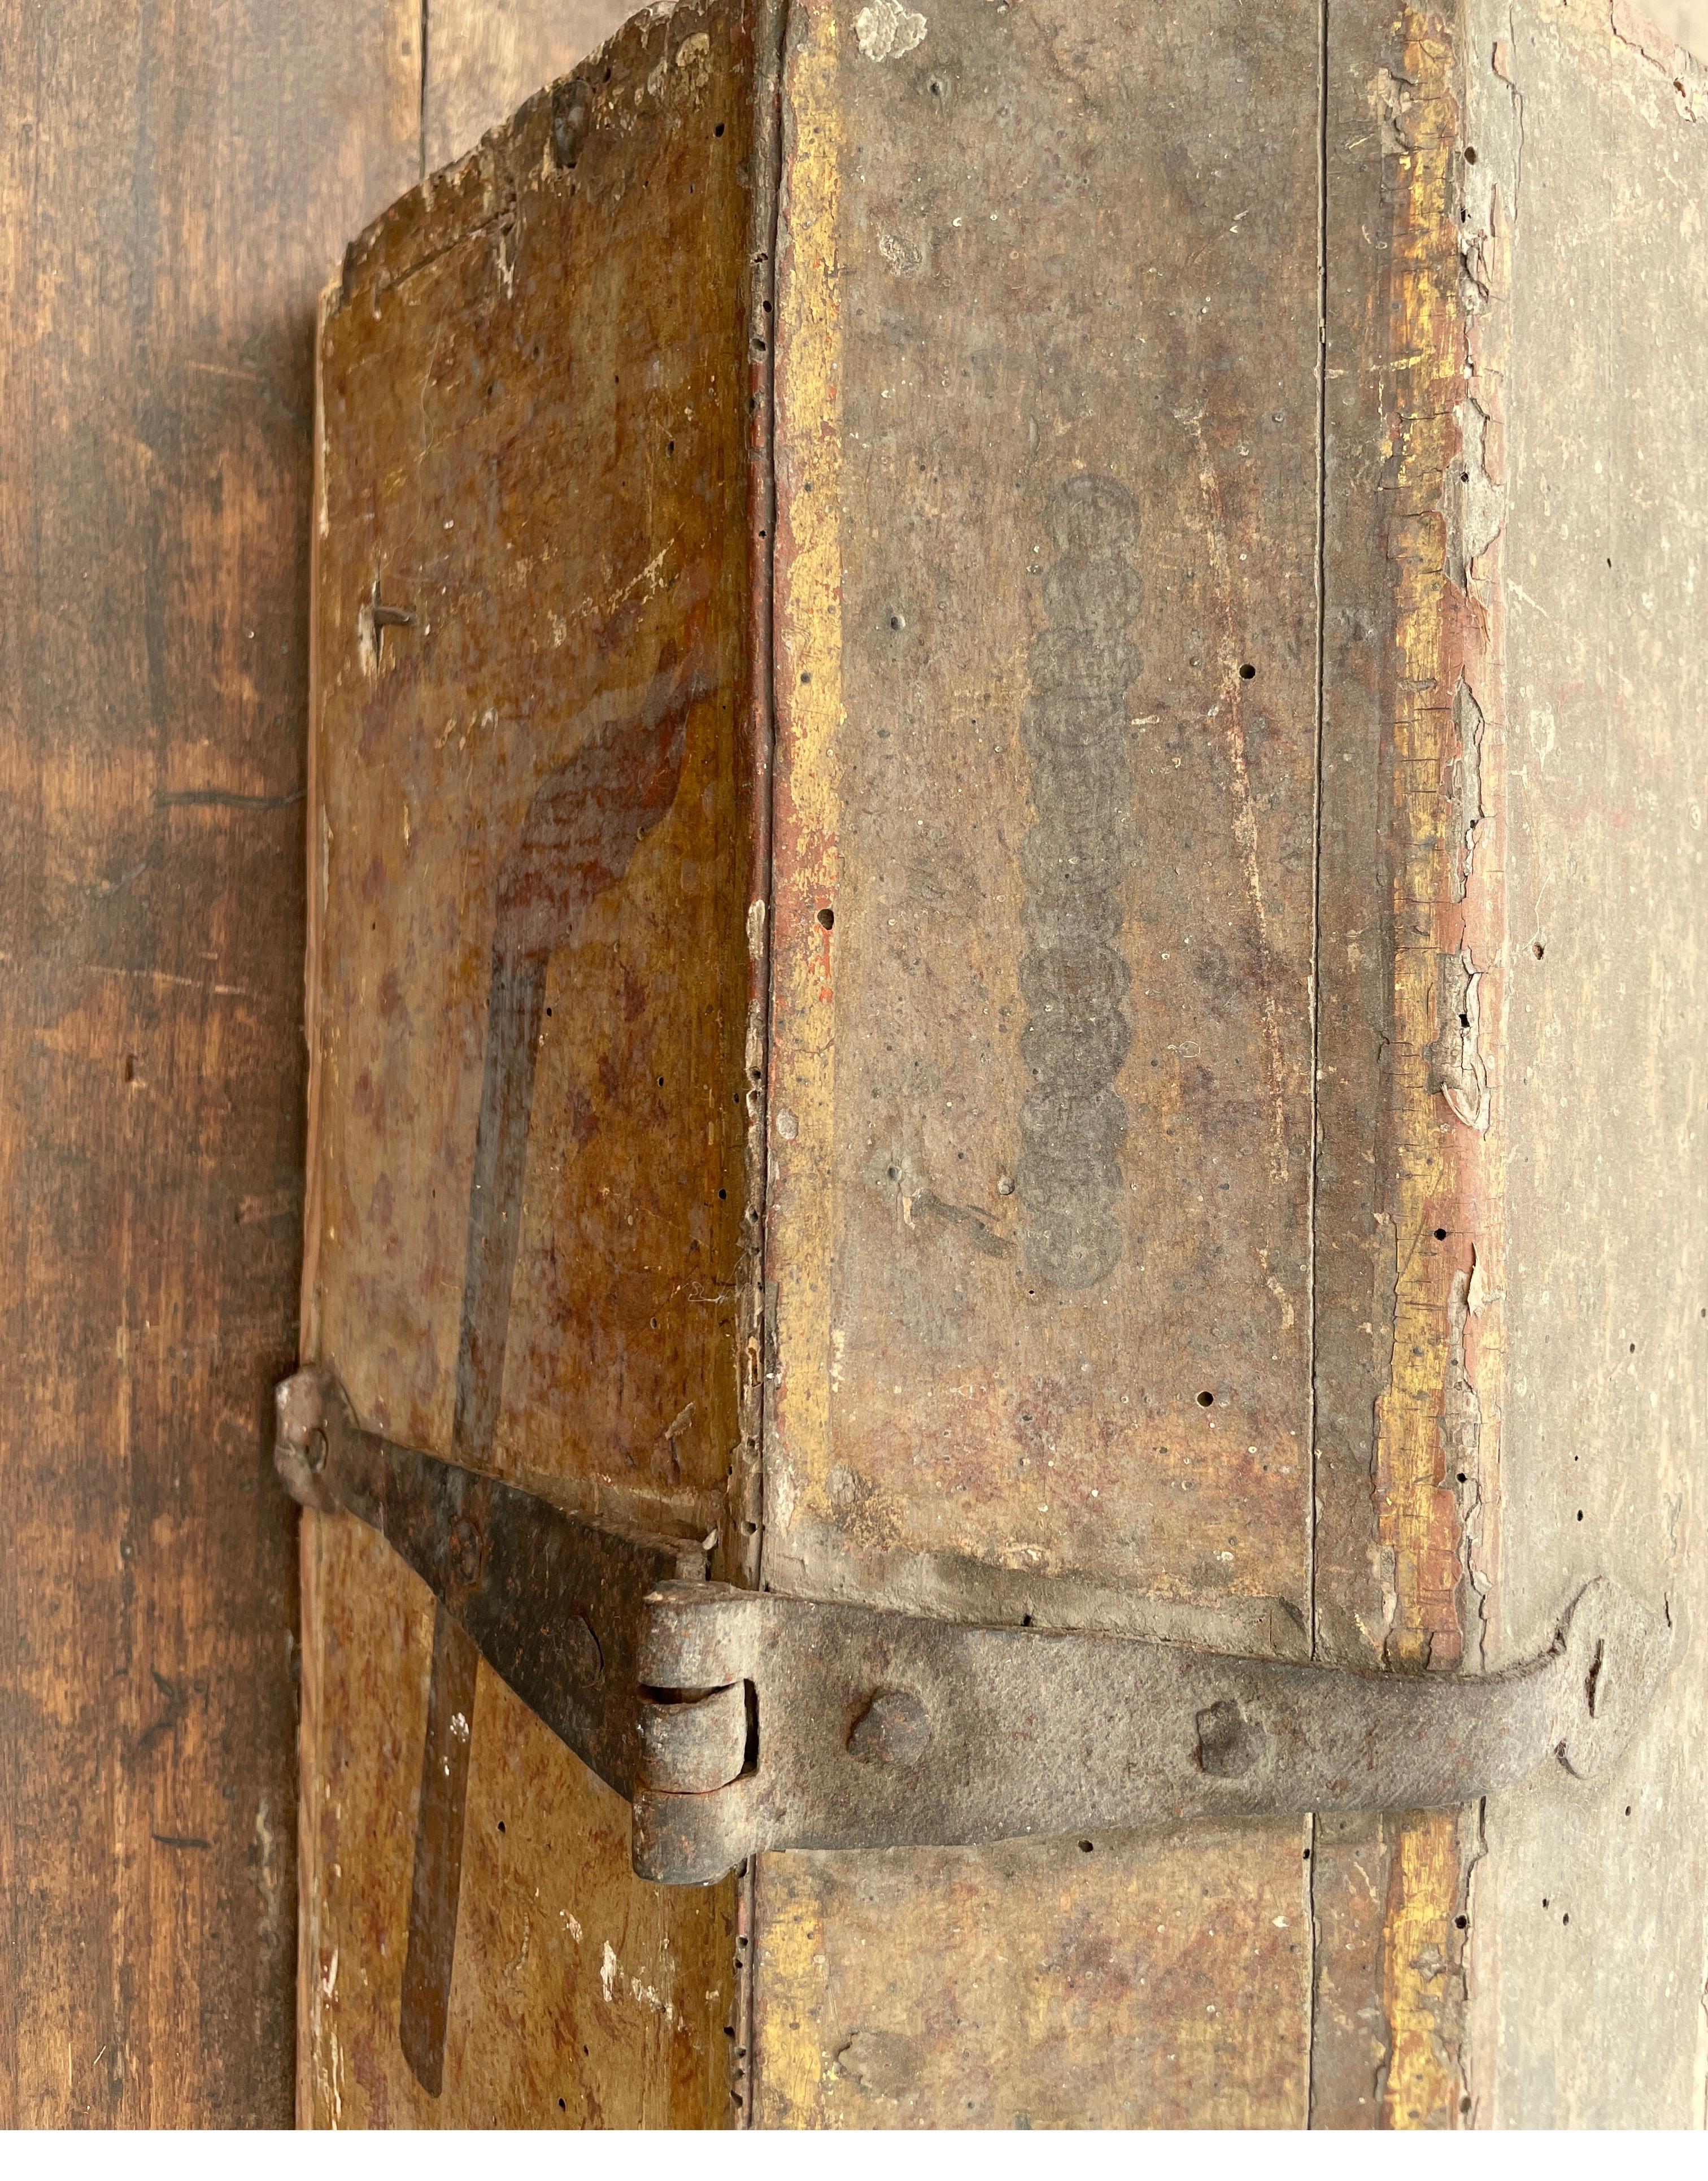 Polychromed Medieval Spanish Rare Storage Box Used for Sword Storage